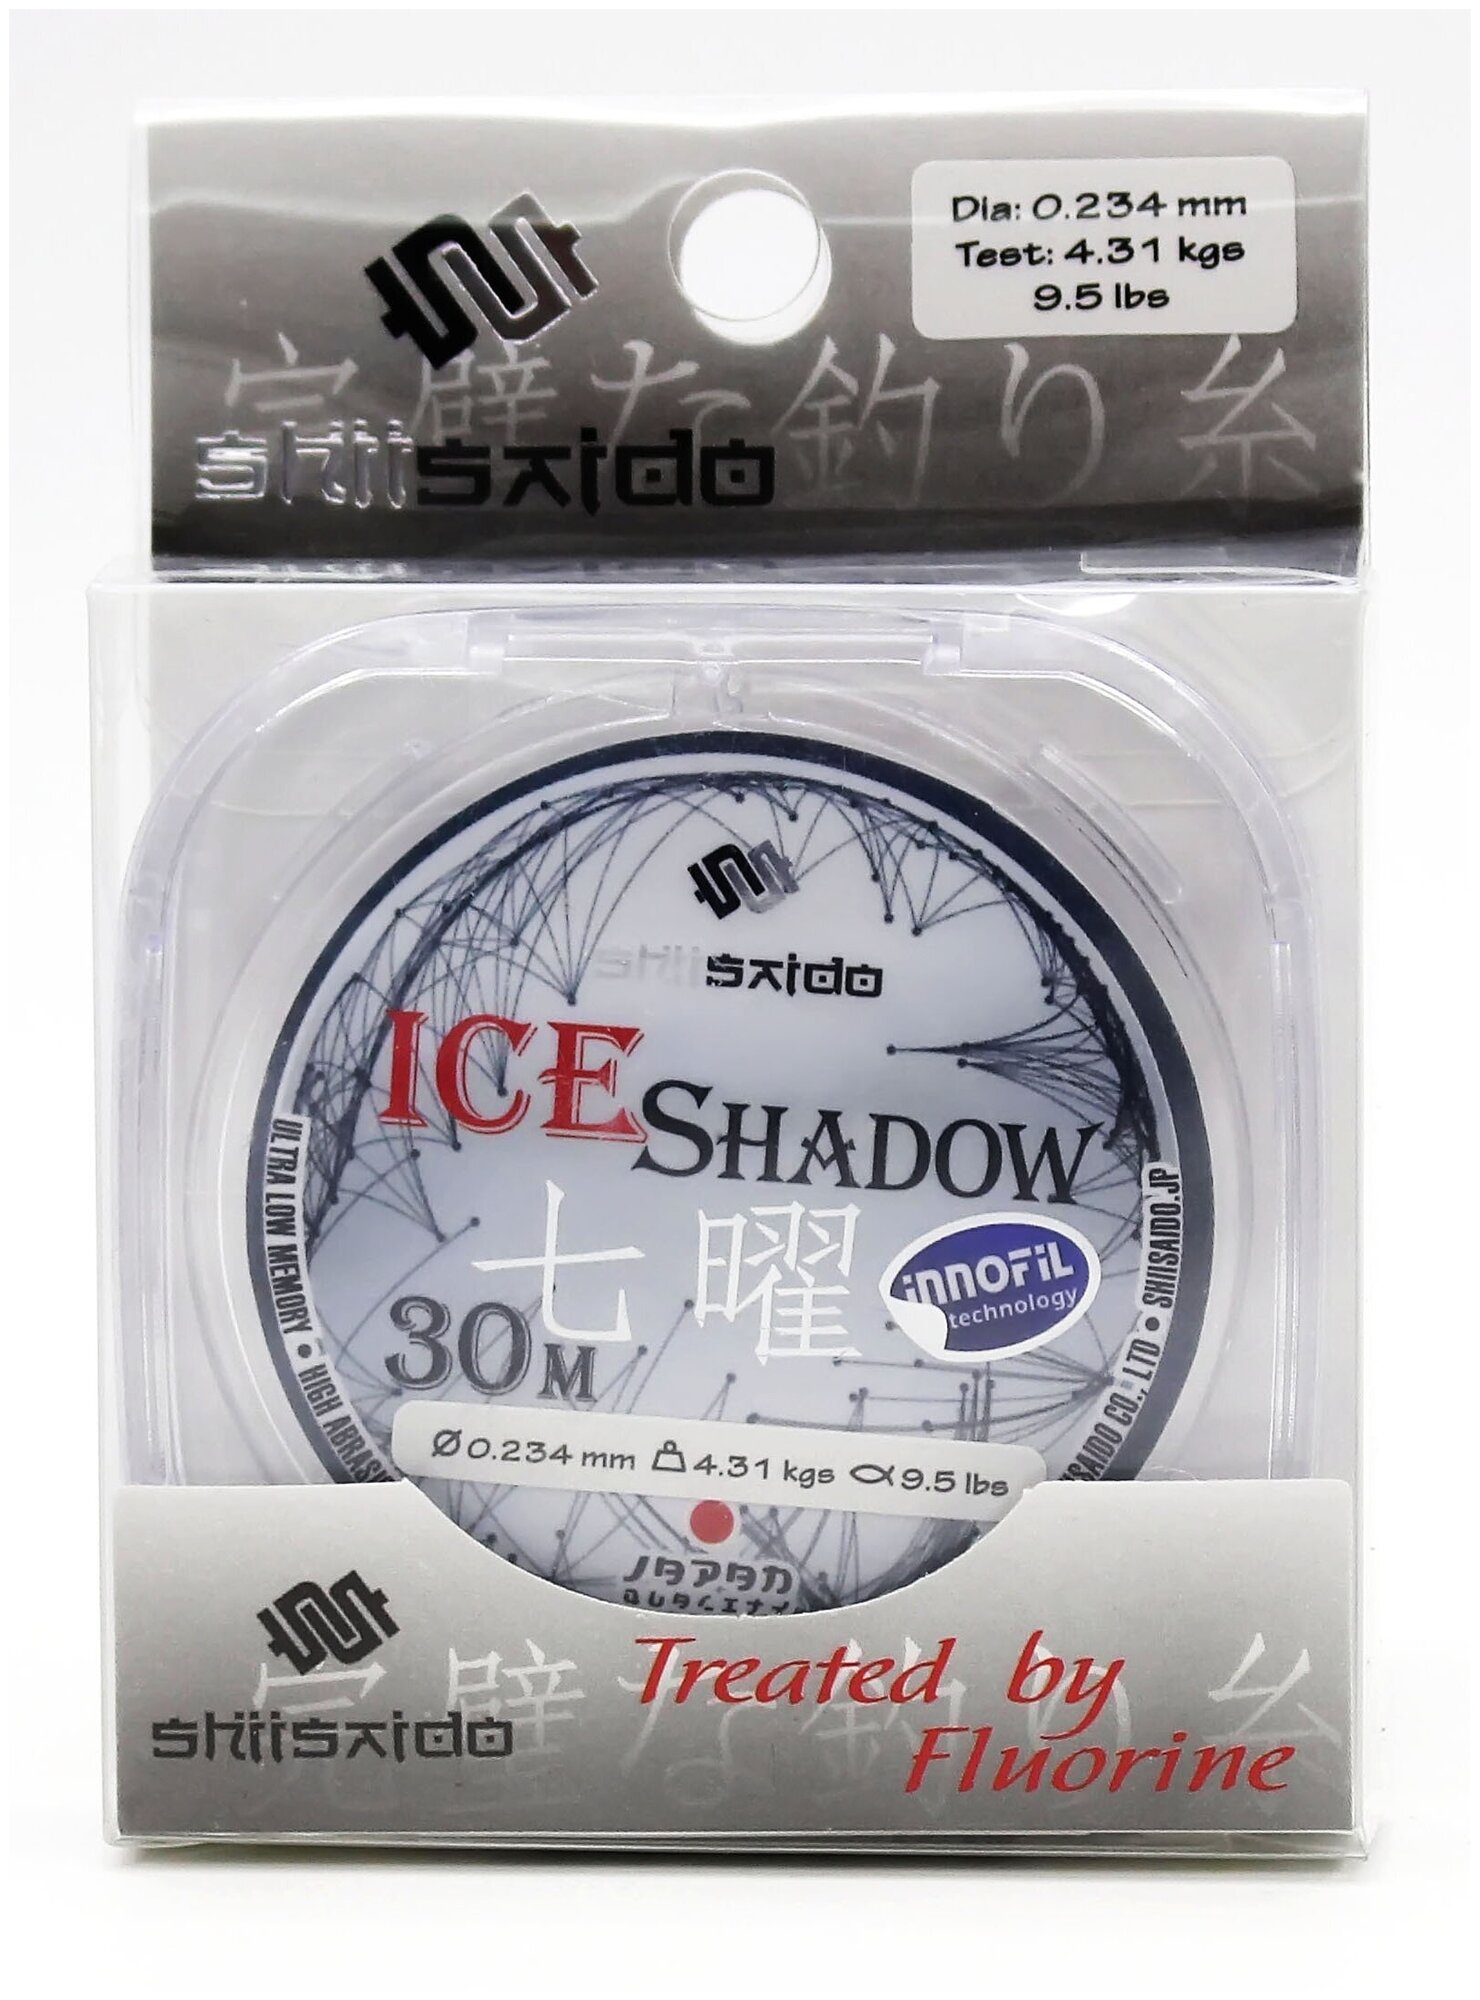 Леска "Shii Saido" Ice Shadow L-30 м d-0309 мм test-739 кг прозрачная/10/400/